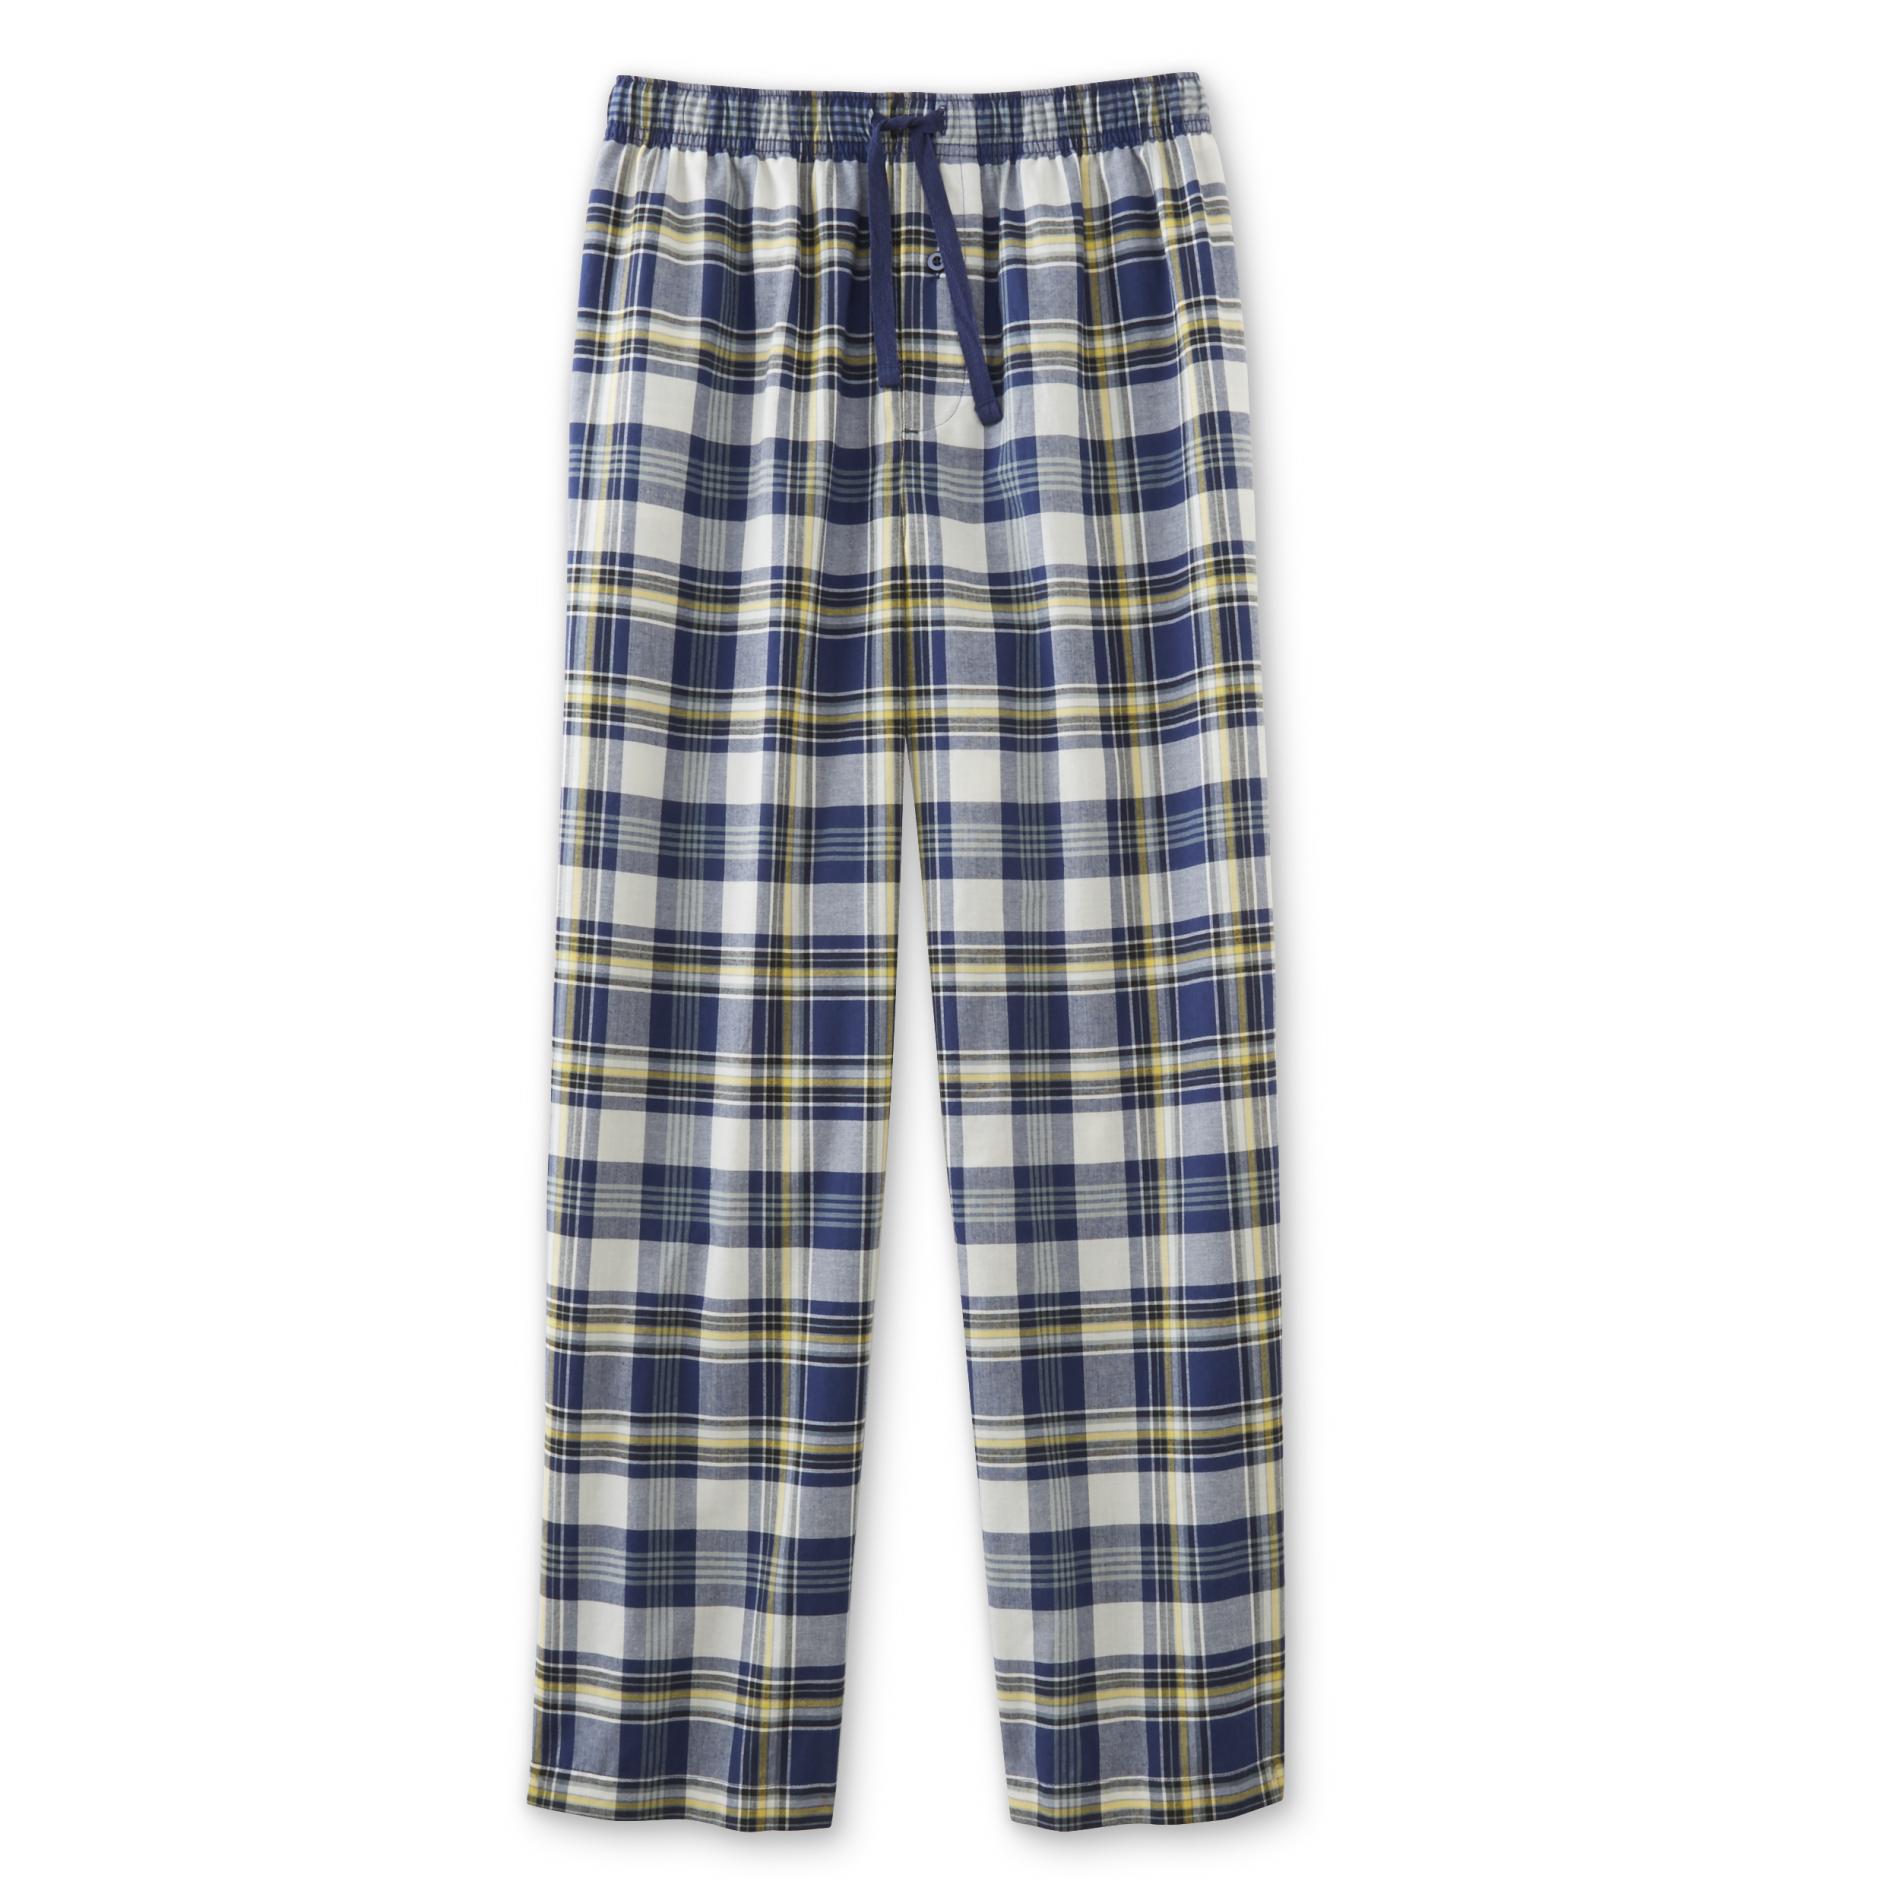 Basic Editions Men's Big & Tall Poplin Pajama Pants - Plaid - Kmart